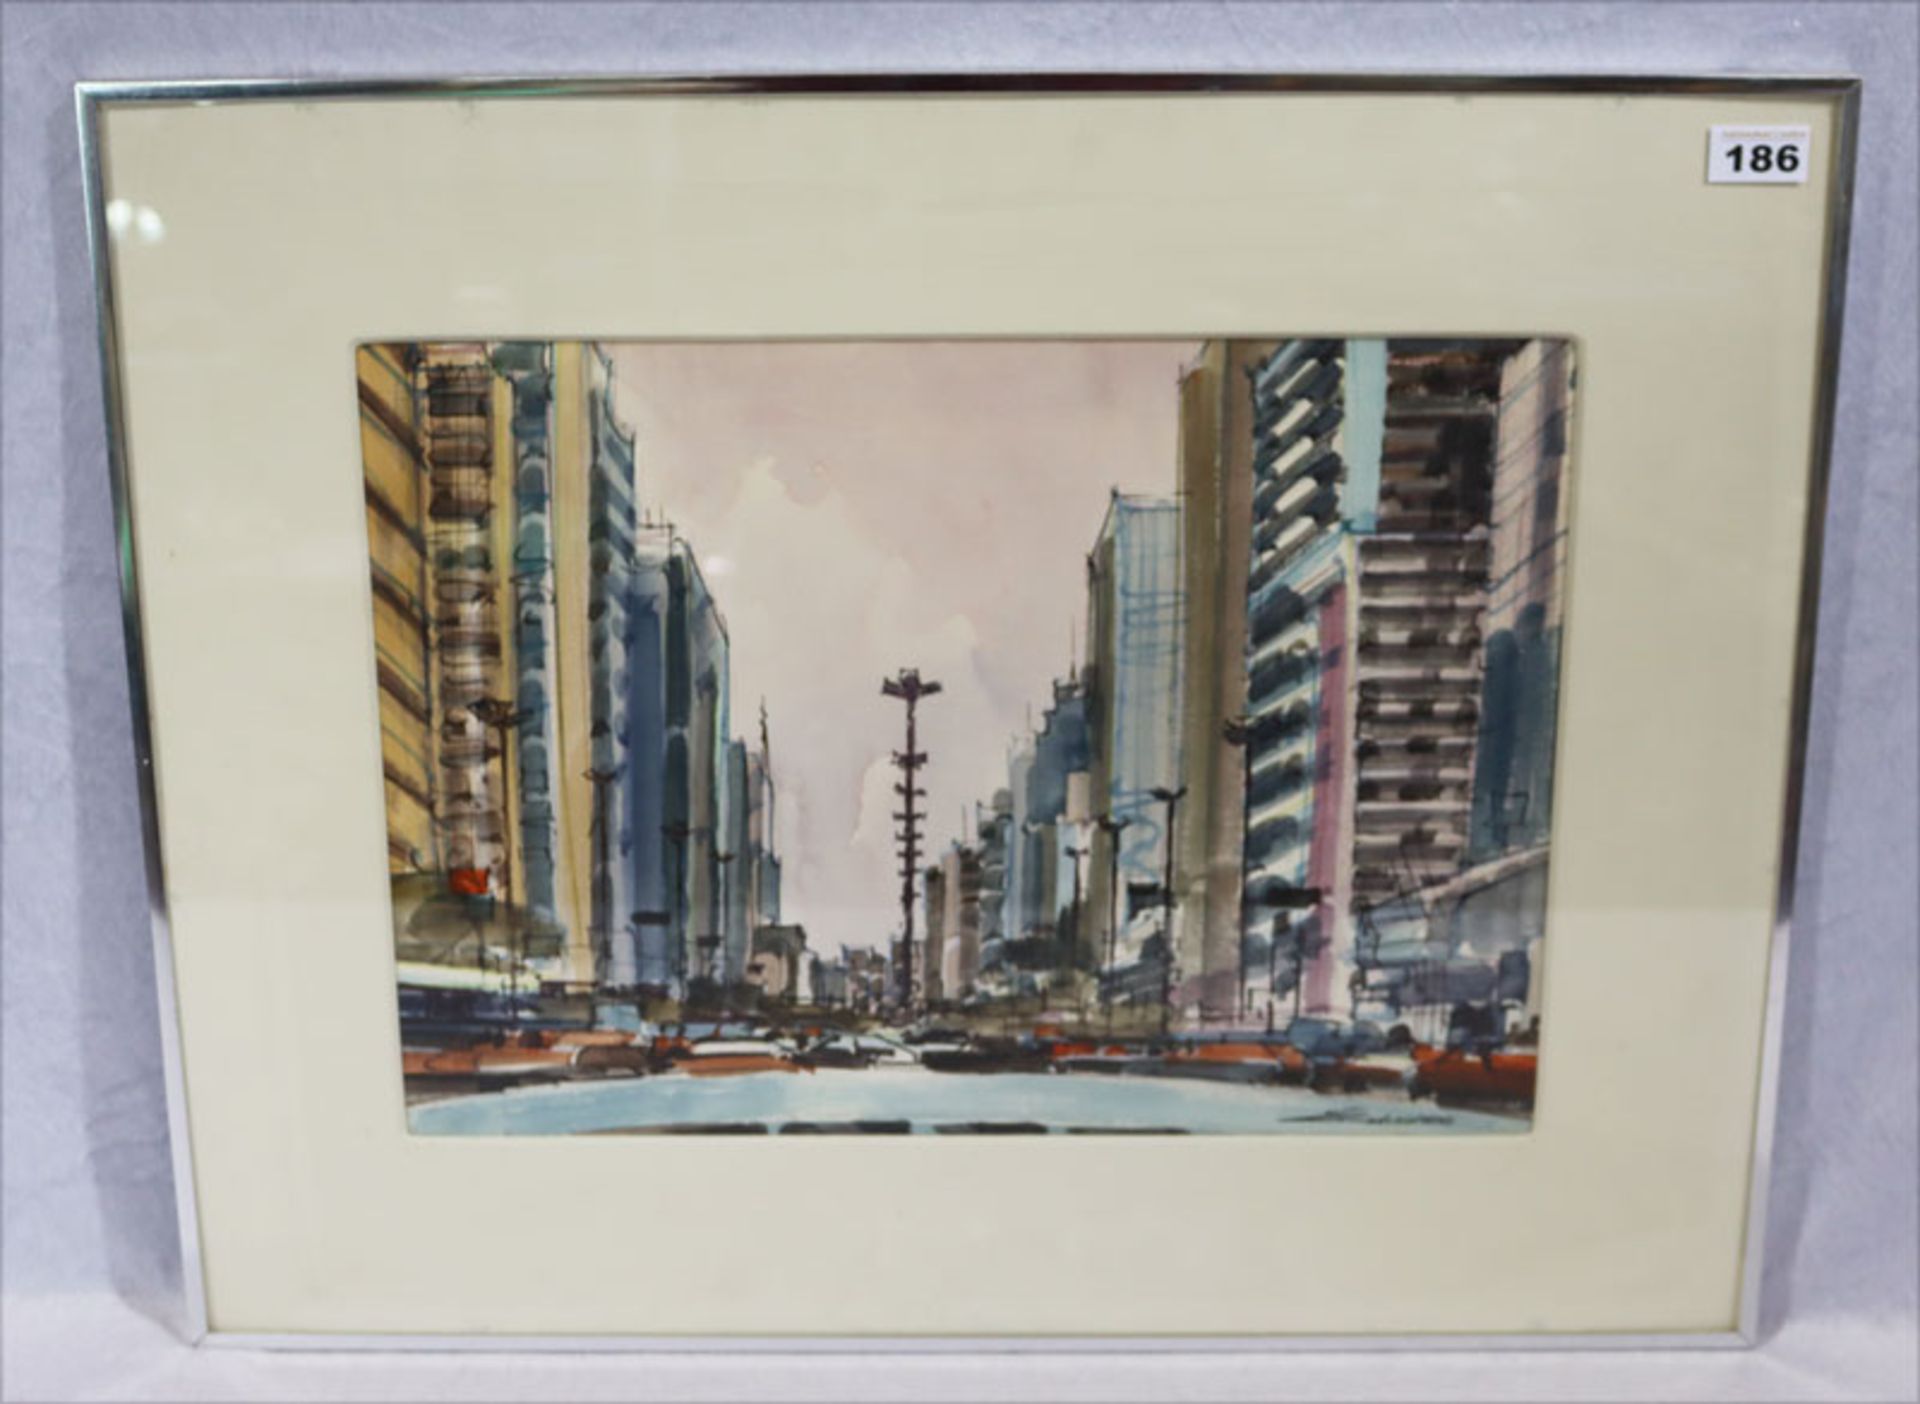 Gemälde Mischtechnik 'Sao Paulo', signiert Edisones, mit Passepartout unter Glas gerahmt, incl.